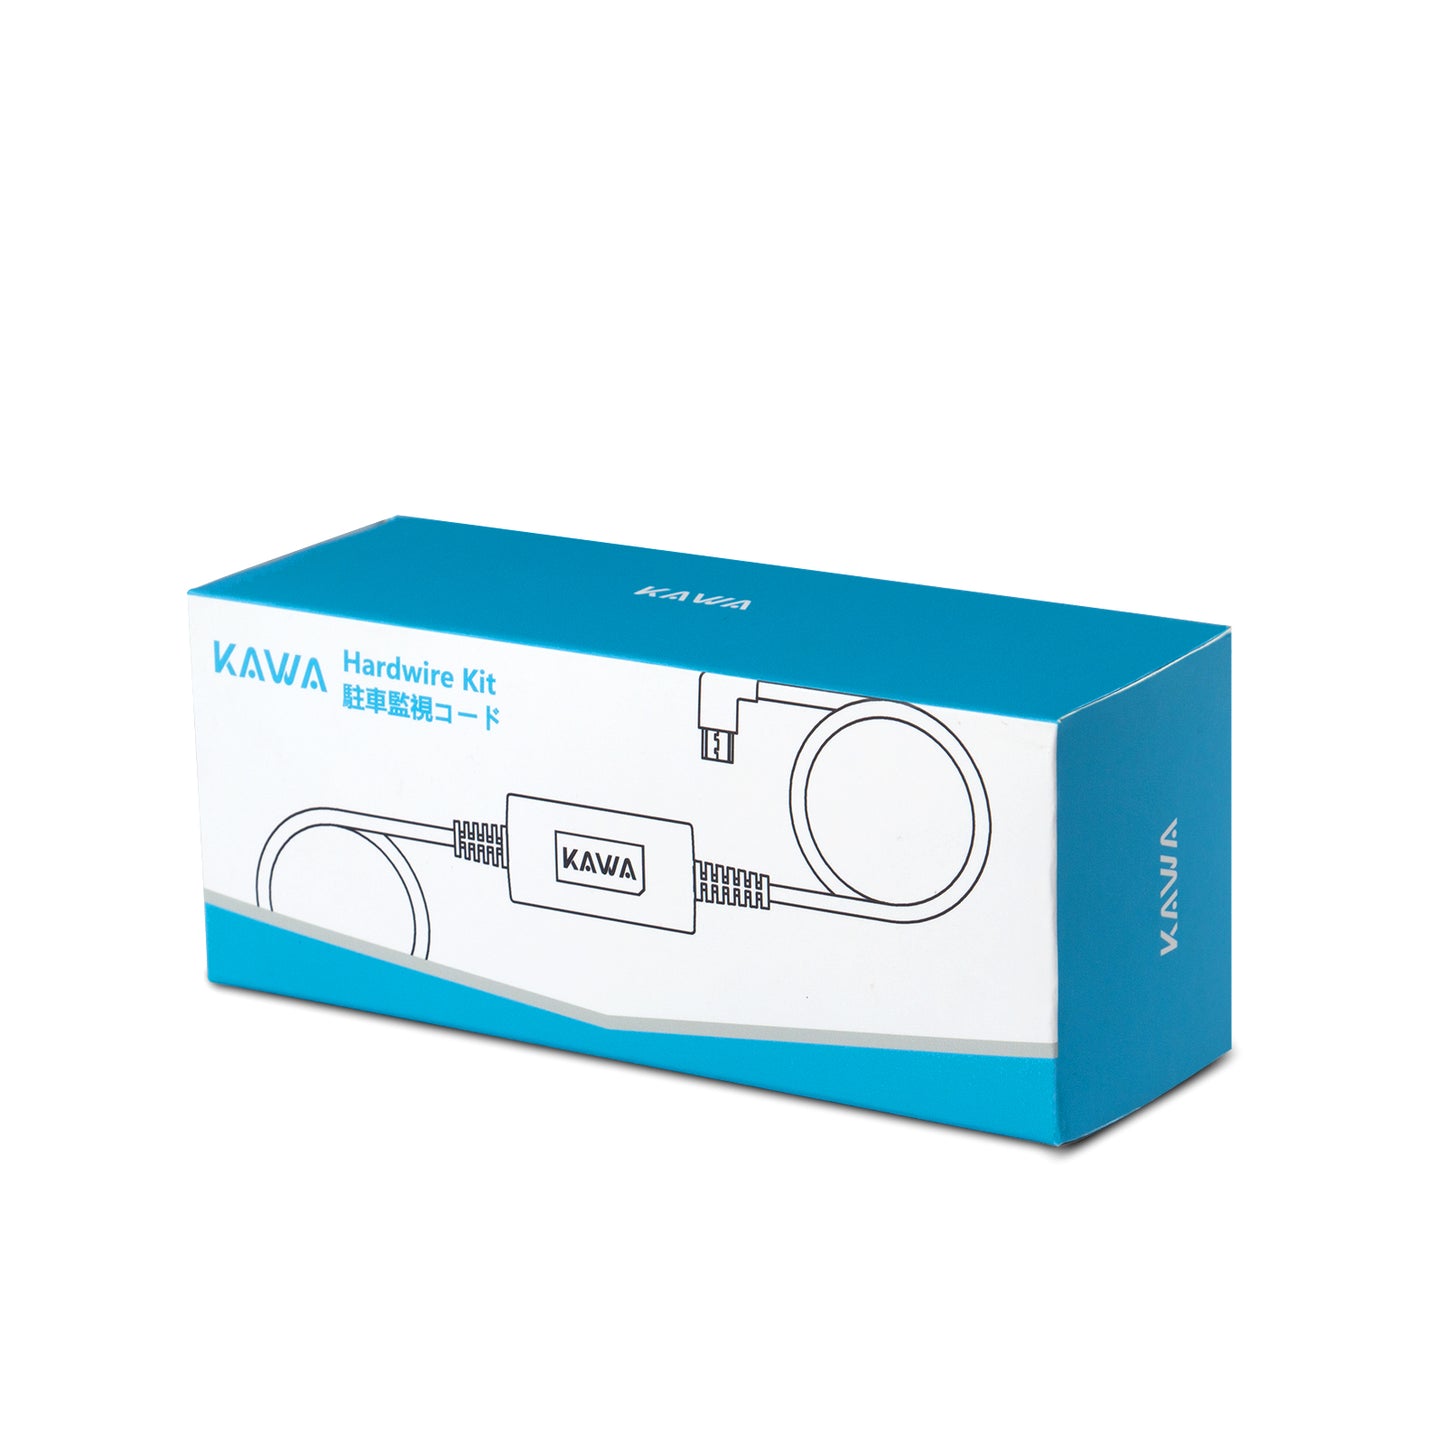 KAWA Hardwire Kit Micro USB Port - compatible with KAWA Dash Cam D5&D6 Parking Surveillance Cable Car DVR 24H Parking Monitor